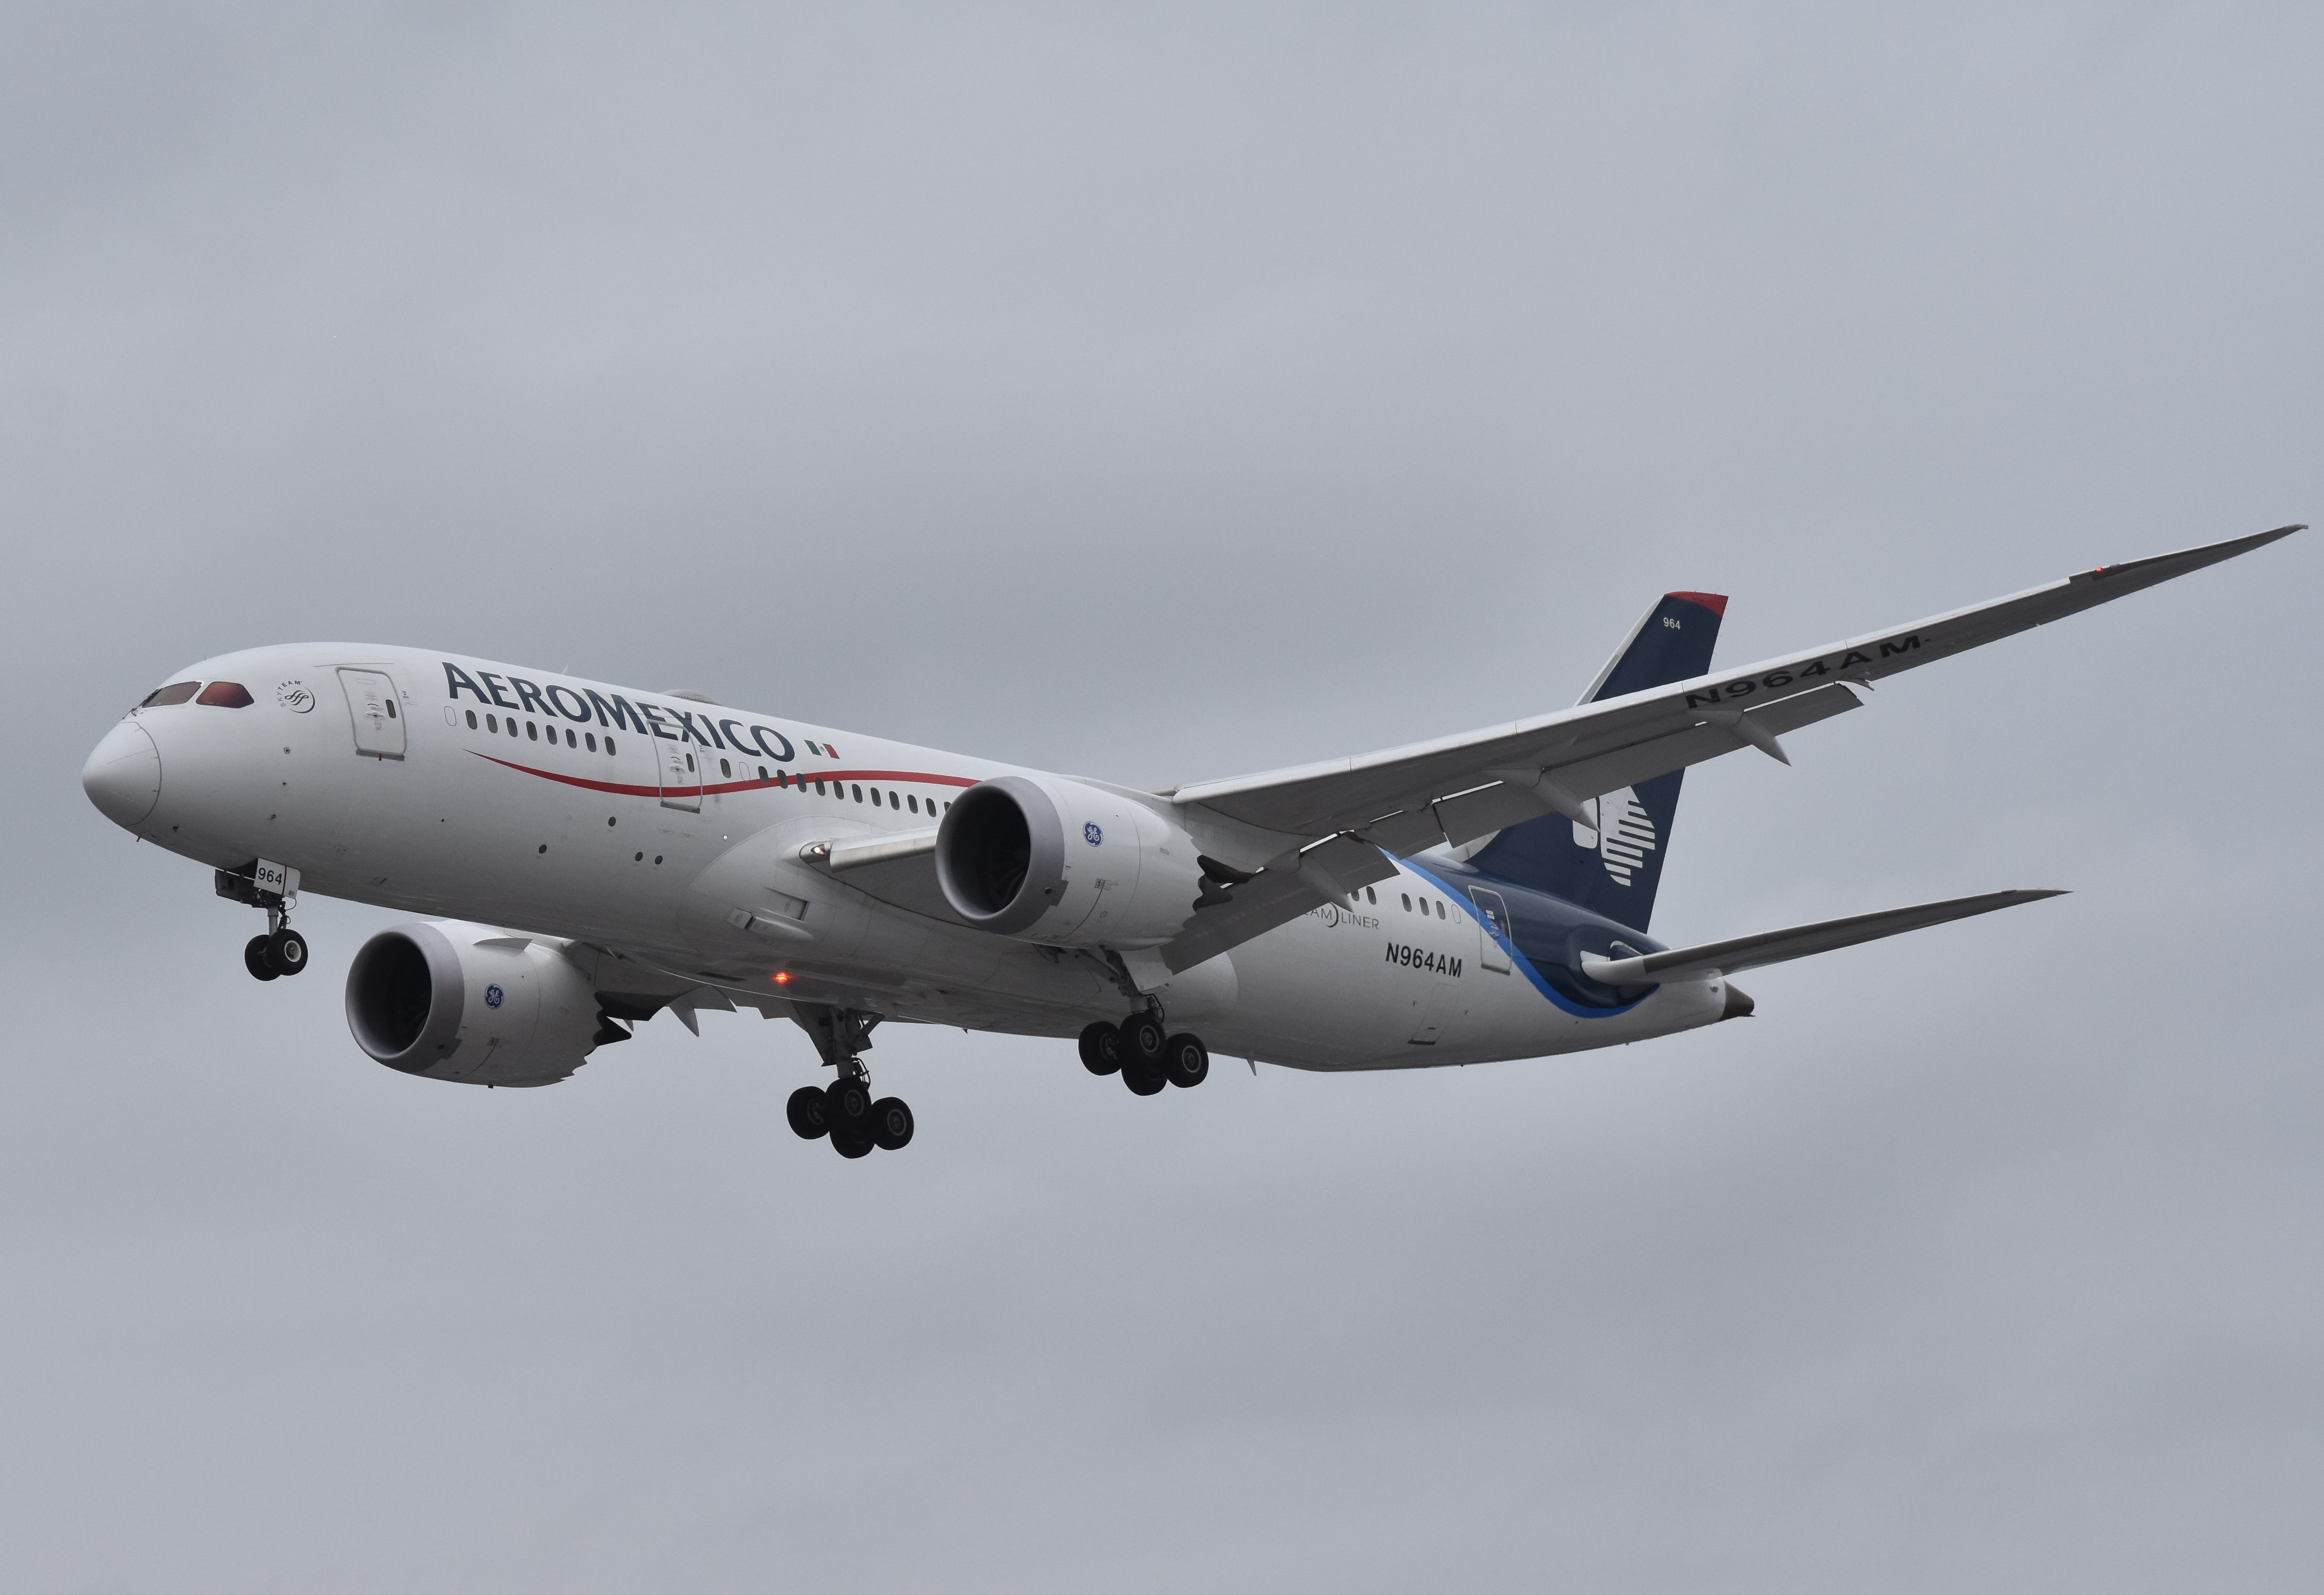 N964AM/N964AM Aeromexico Boeing 787 Airframe Information - AVSpotters.com